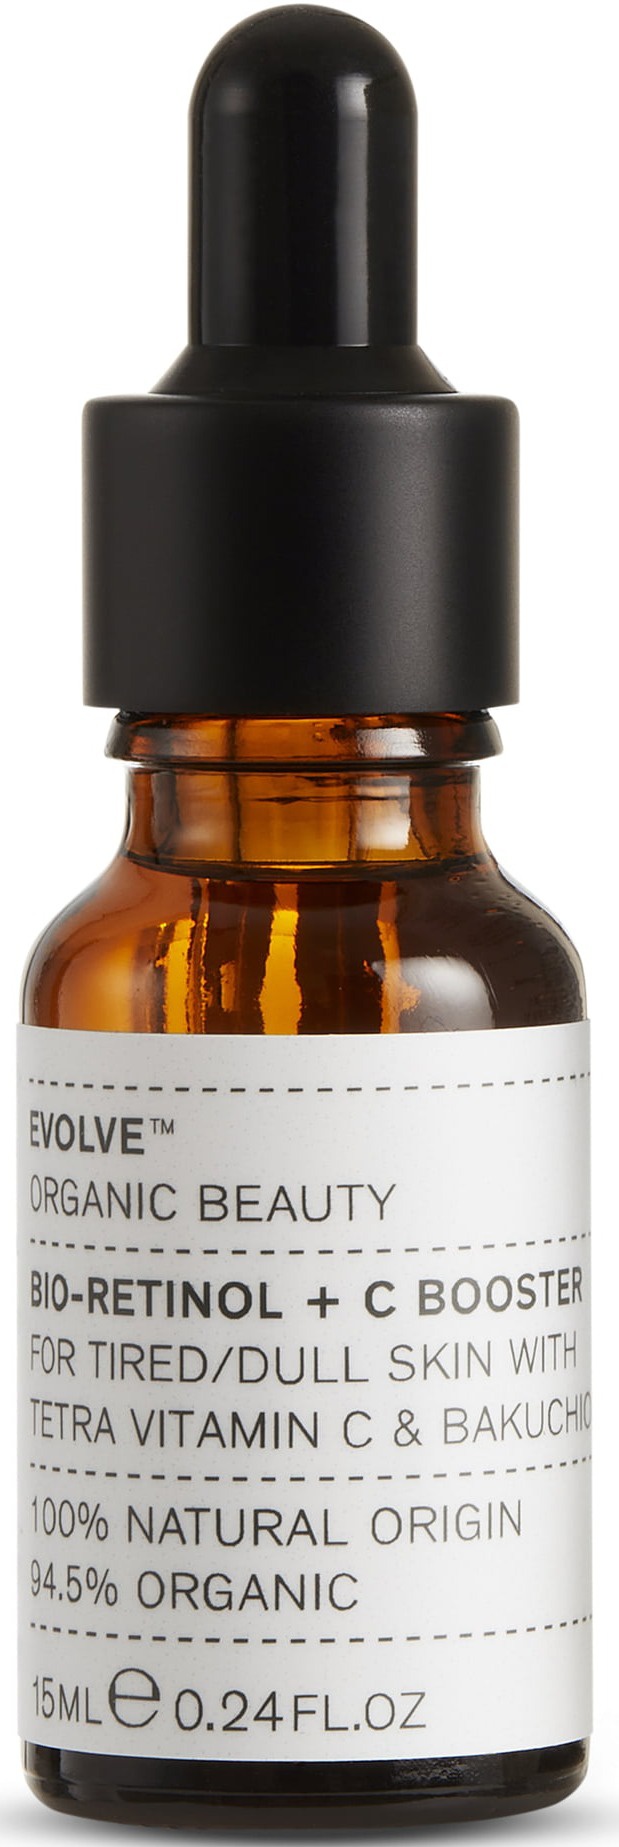 Evolve Organic Beauty Bio Retinol + C Booster